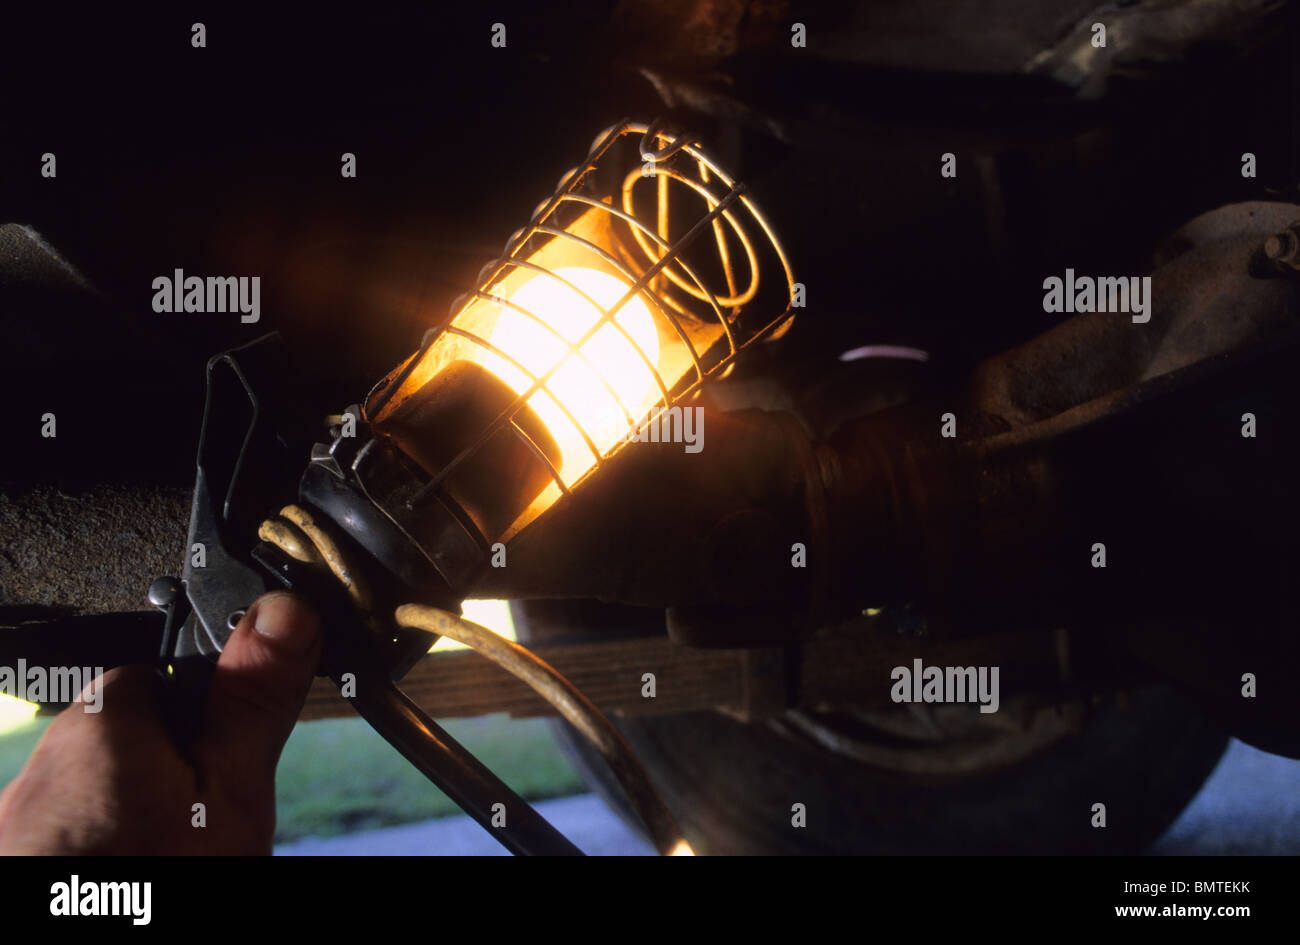 mechanic working underneath vehicle using inspection lamp Stock Photo